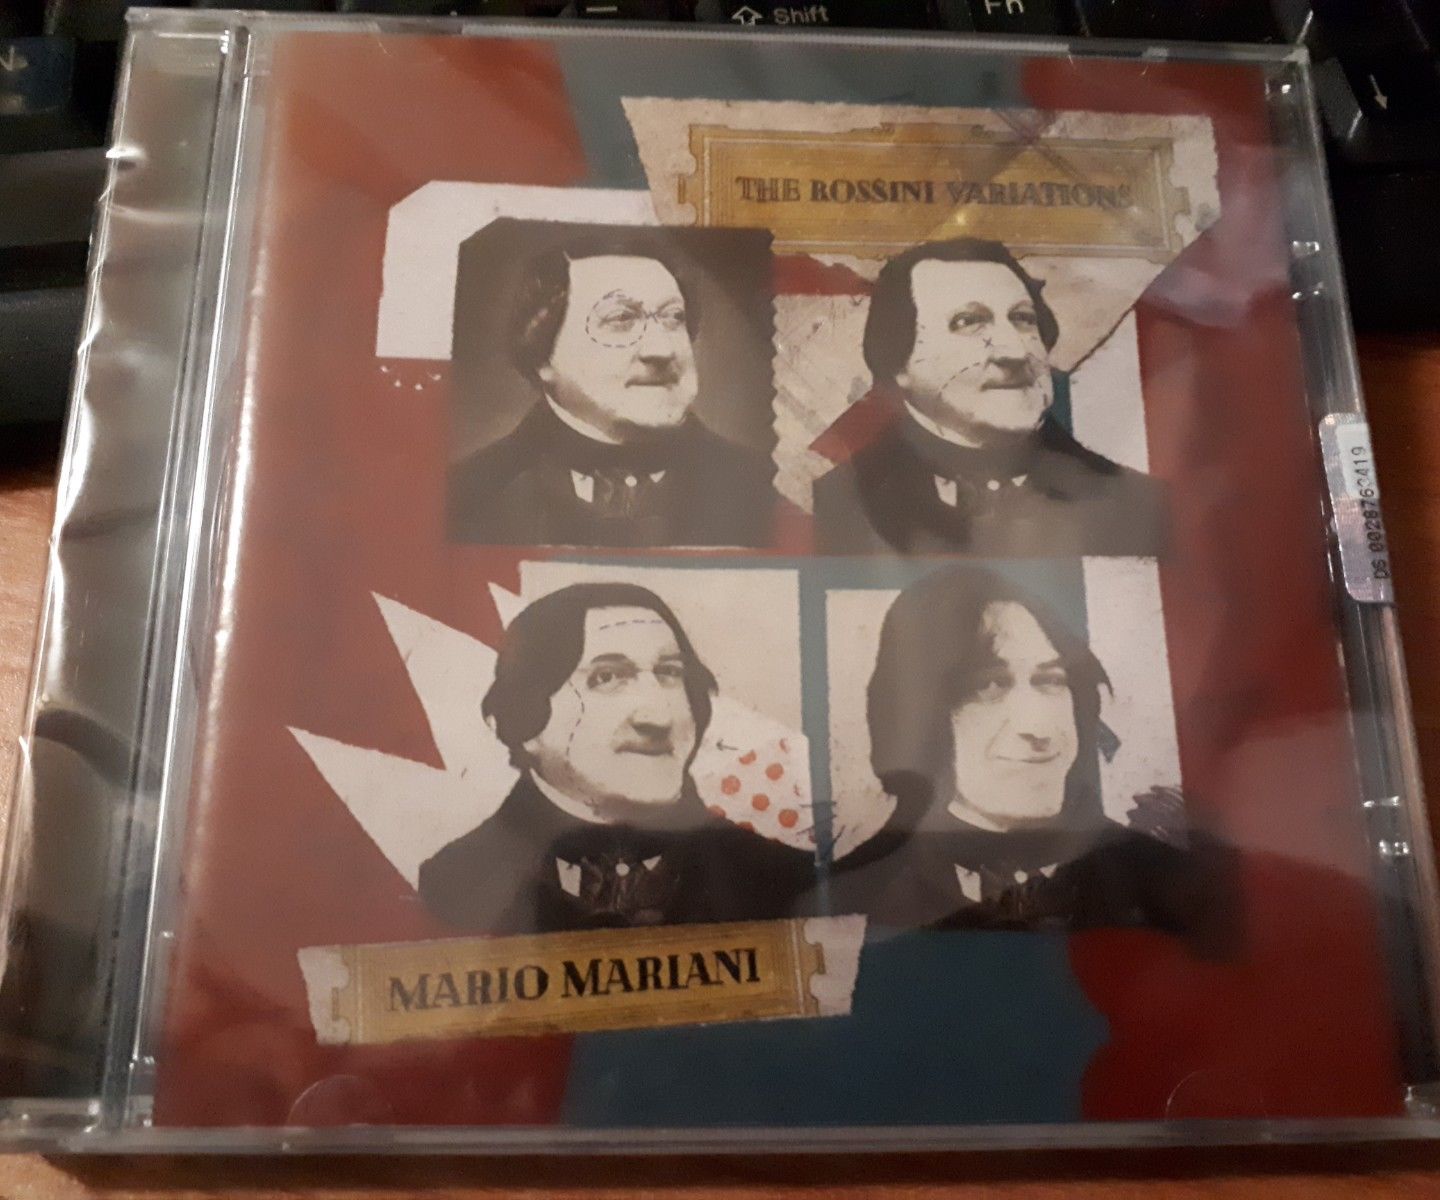 Mario Mariani - The Rossini Variations